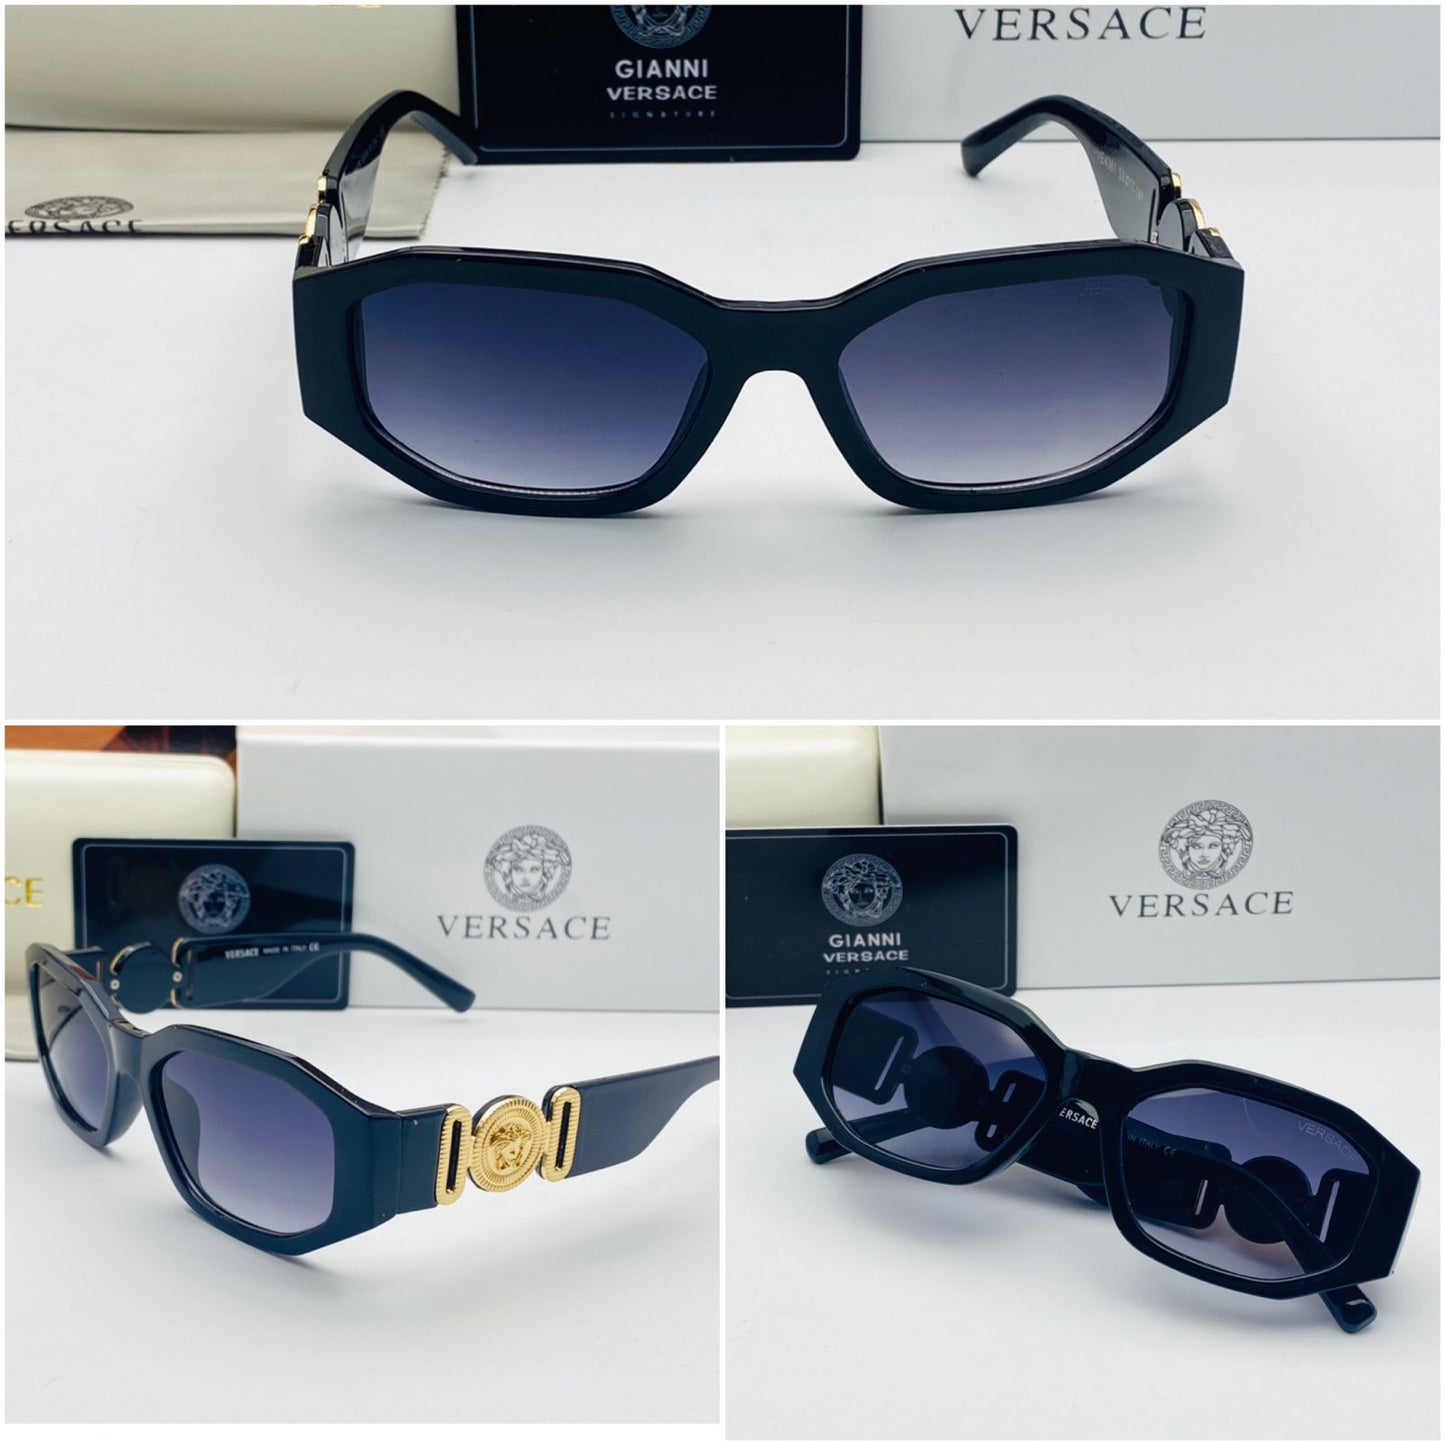 Versace fashionholic Sunglasses!